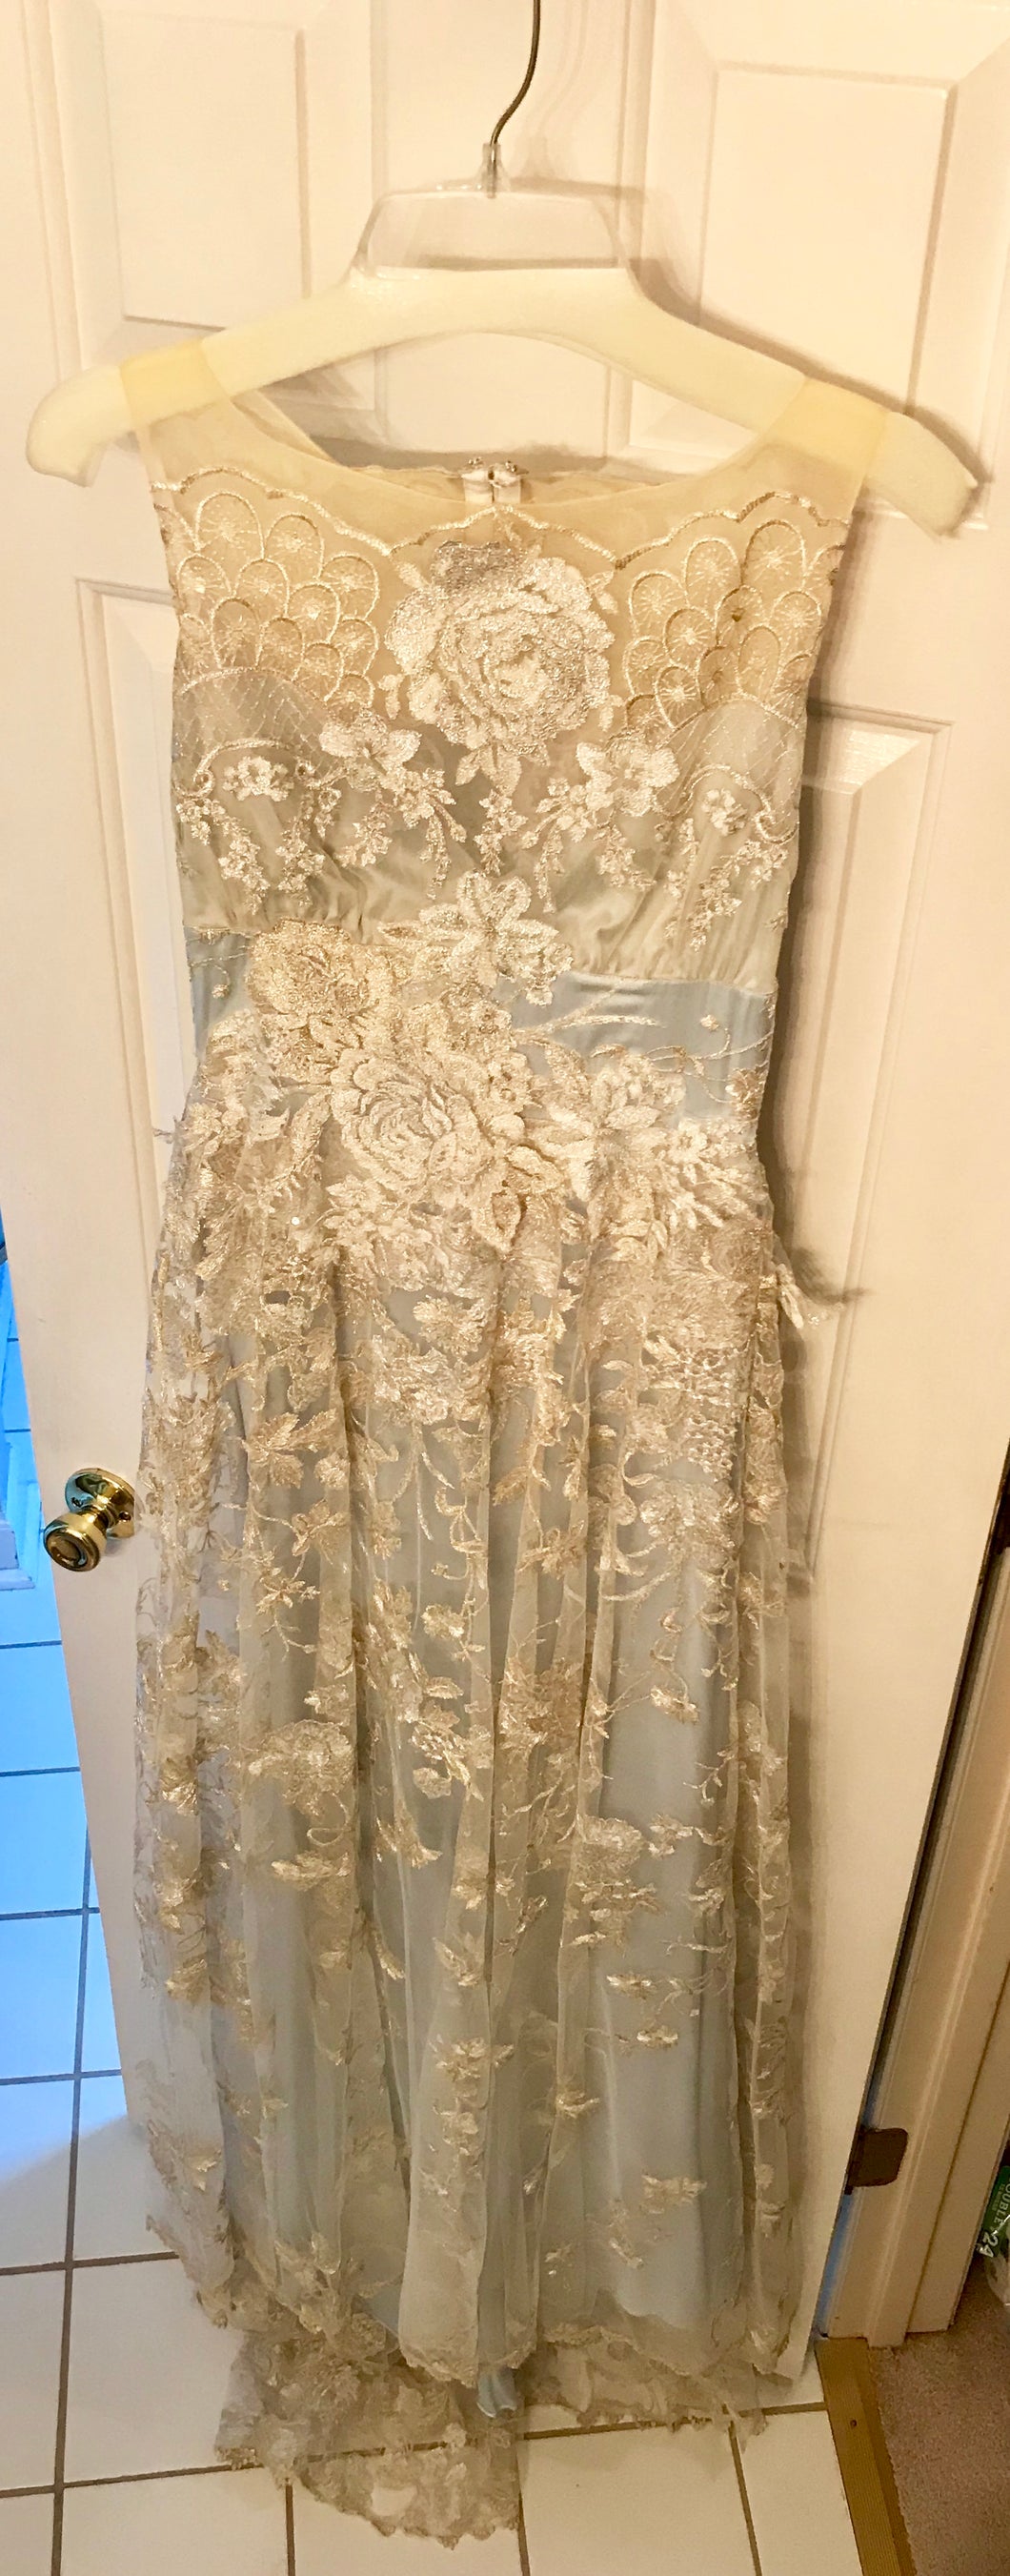 Claire Pettibone 'Eden' size 4 new wedding dress front view on hanger